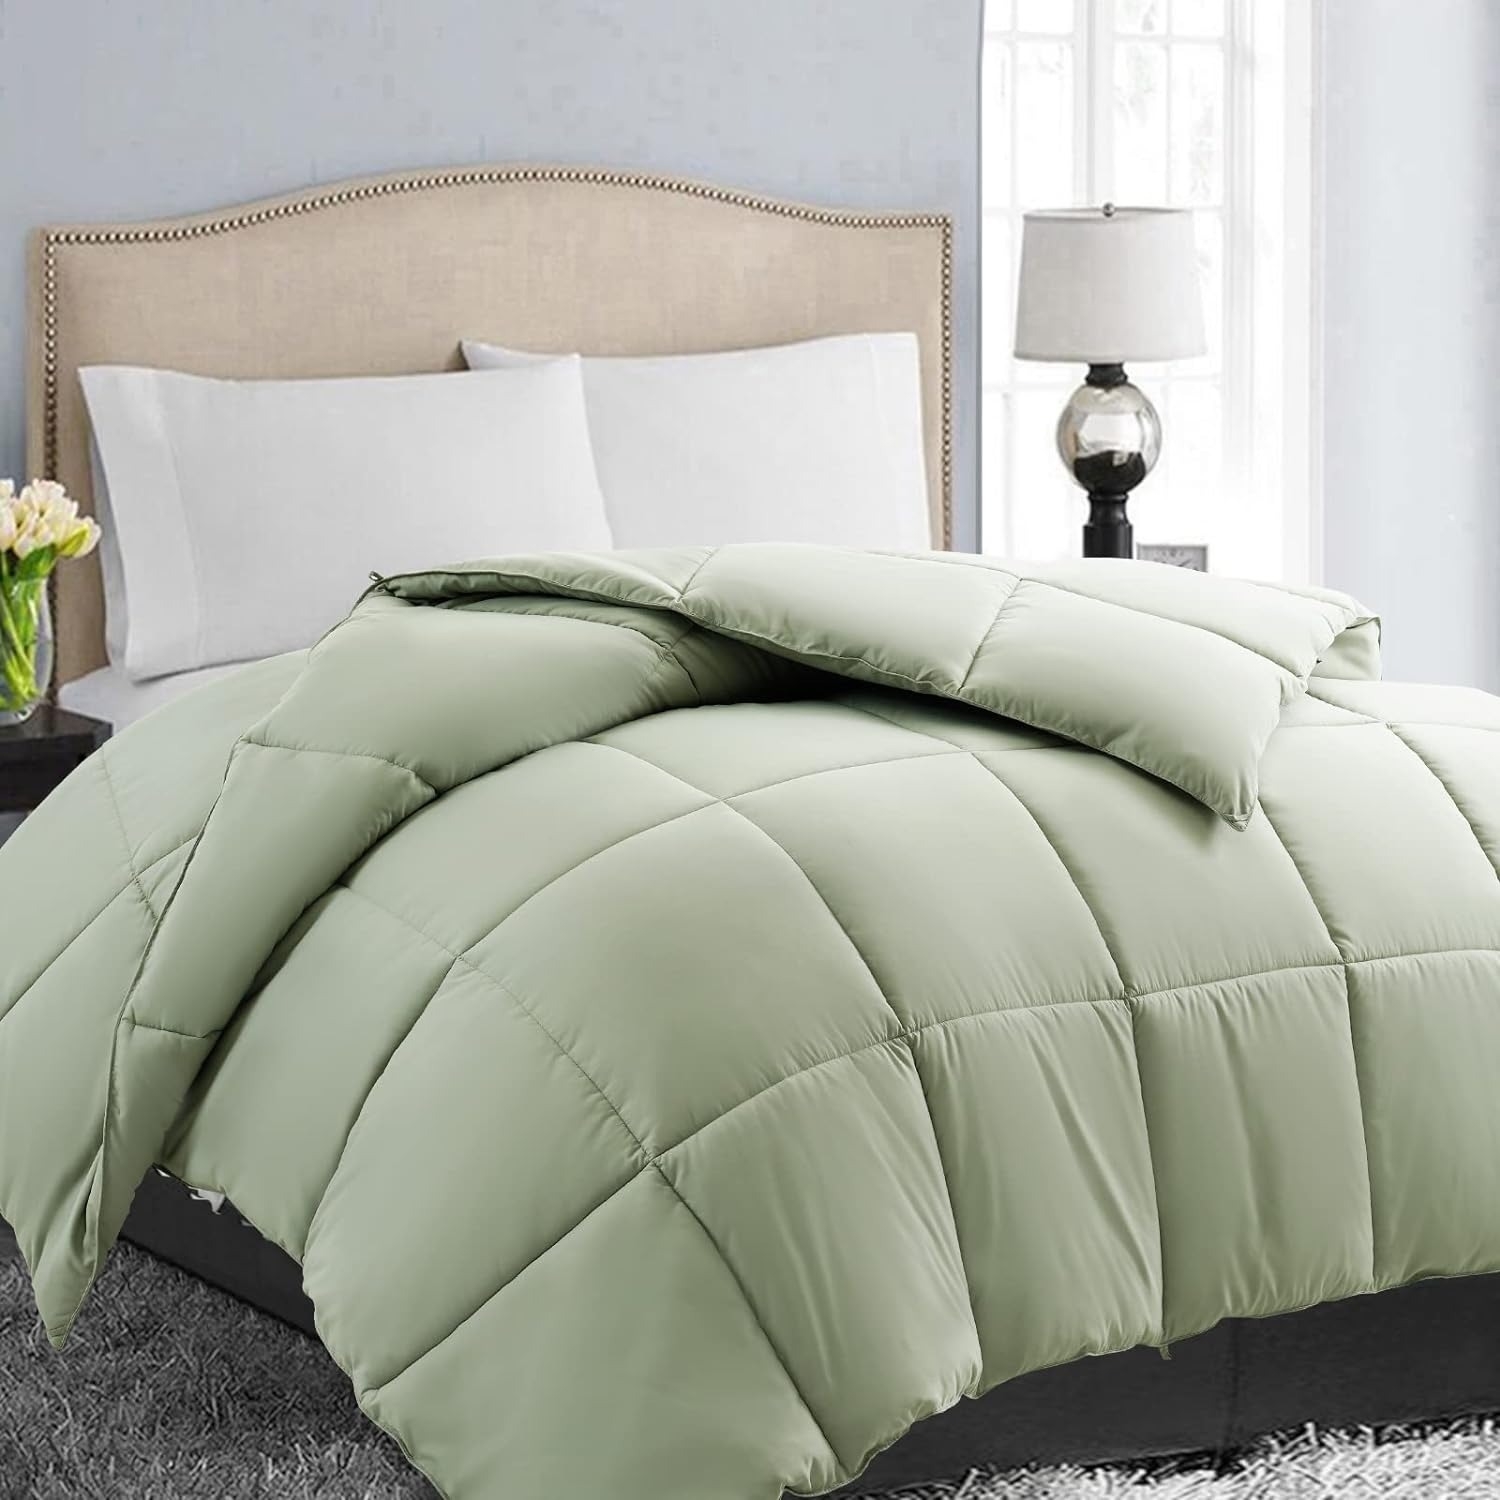  Bedsure Twin Comforter Set Dorm Bedding - Sage Green, Cute  Floral Bedding Comforter Set for Women, Soft Reversible Botanical Flowers  Comforter, 2 Pieces, Includes 1 Comforter & 1 Pillow Sham : Home & Kitchen